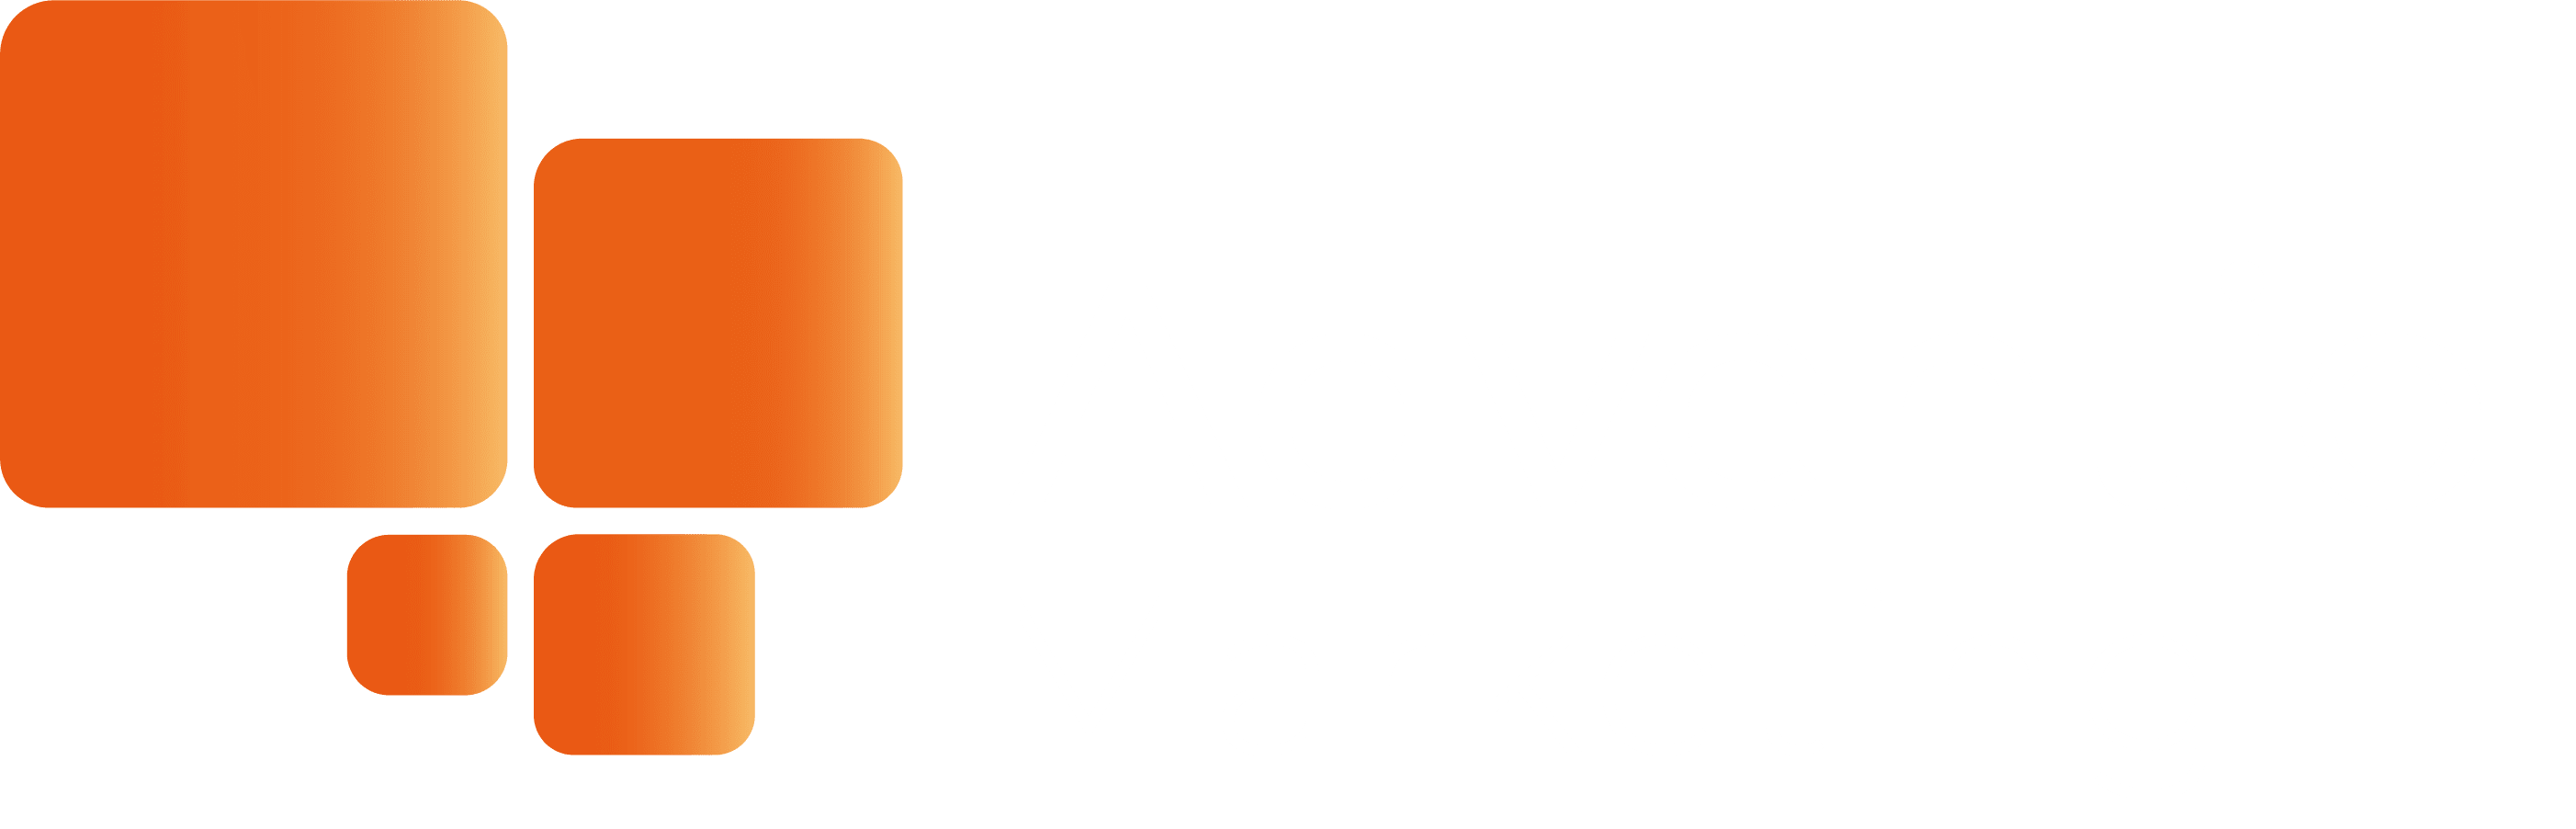 Adventio Marketing logo